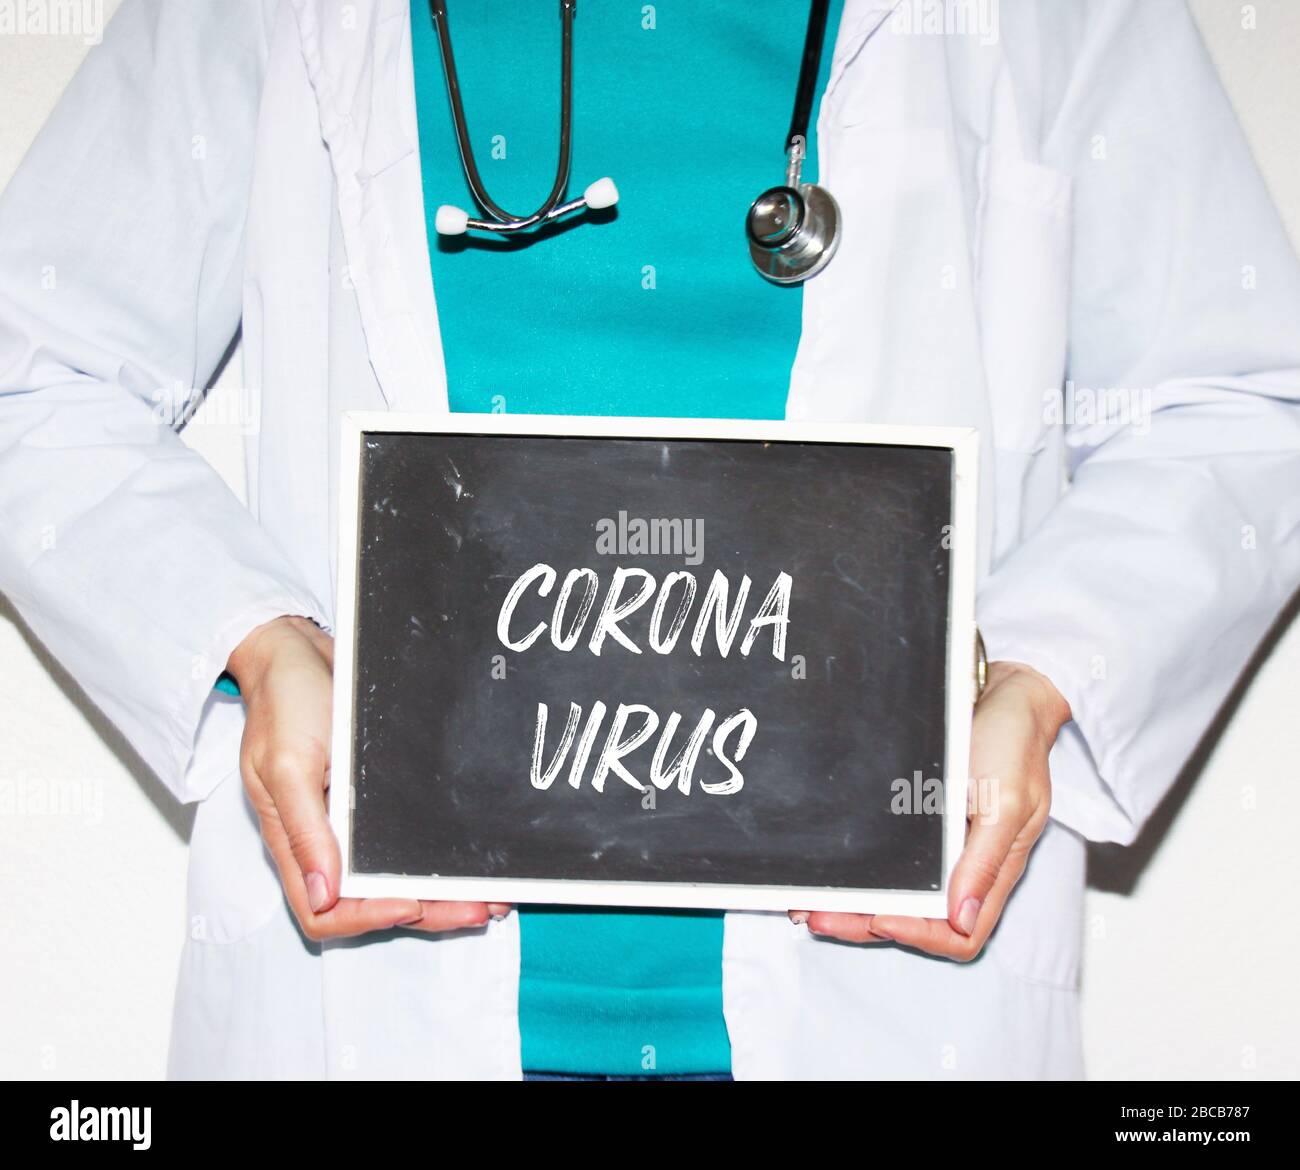 Coronavirus, Outbreak of the Dangerous Corona virus Disease Stock Photo